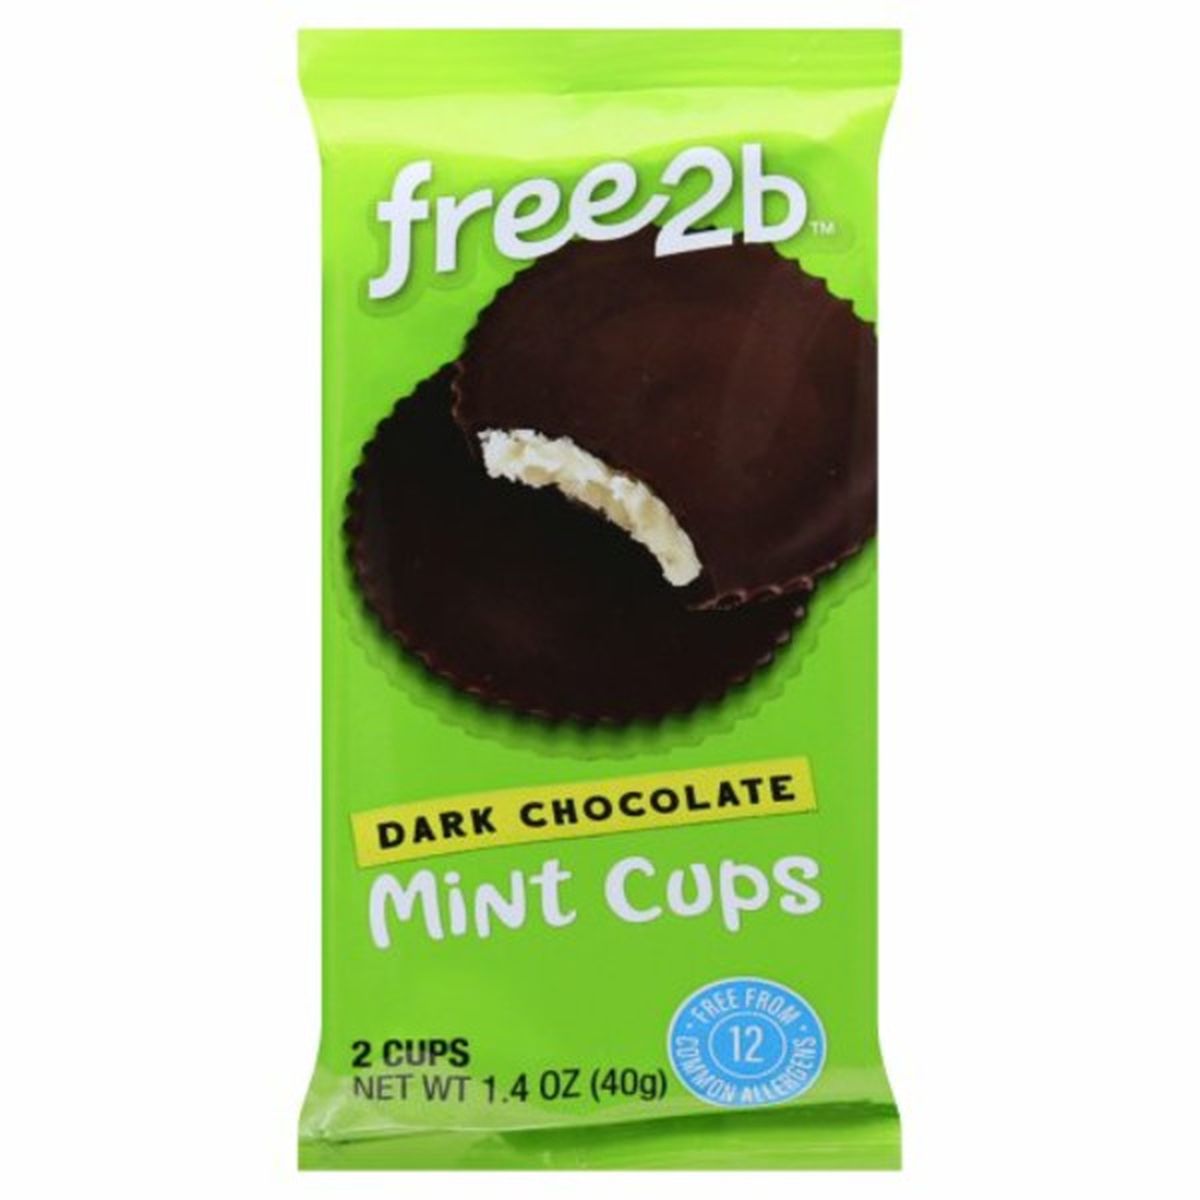 Calories in Free2b Mint Cups, Dark Chocolate